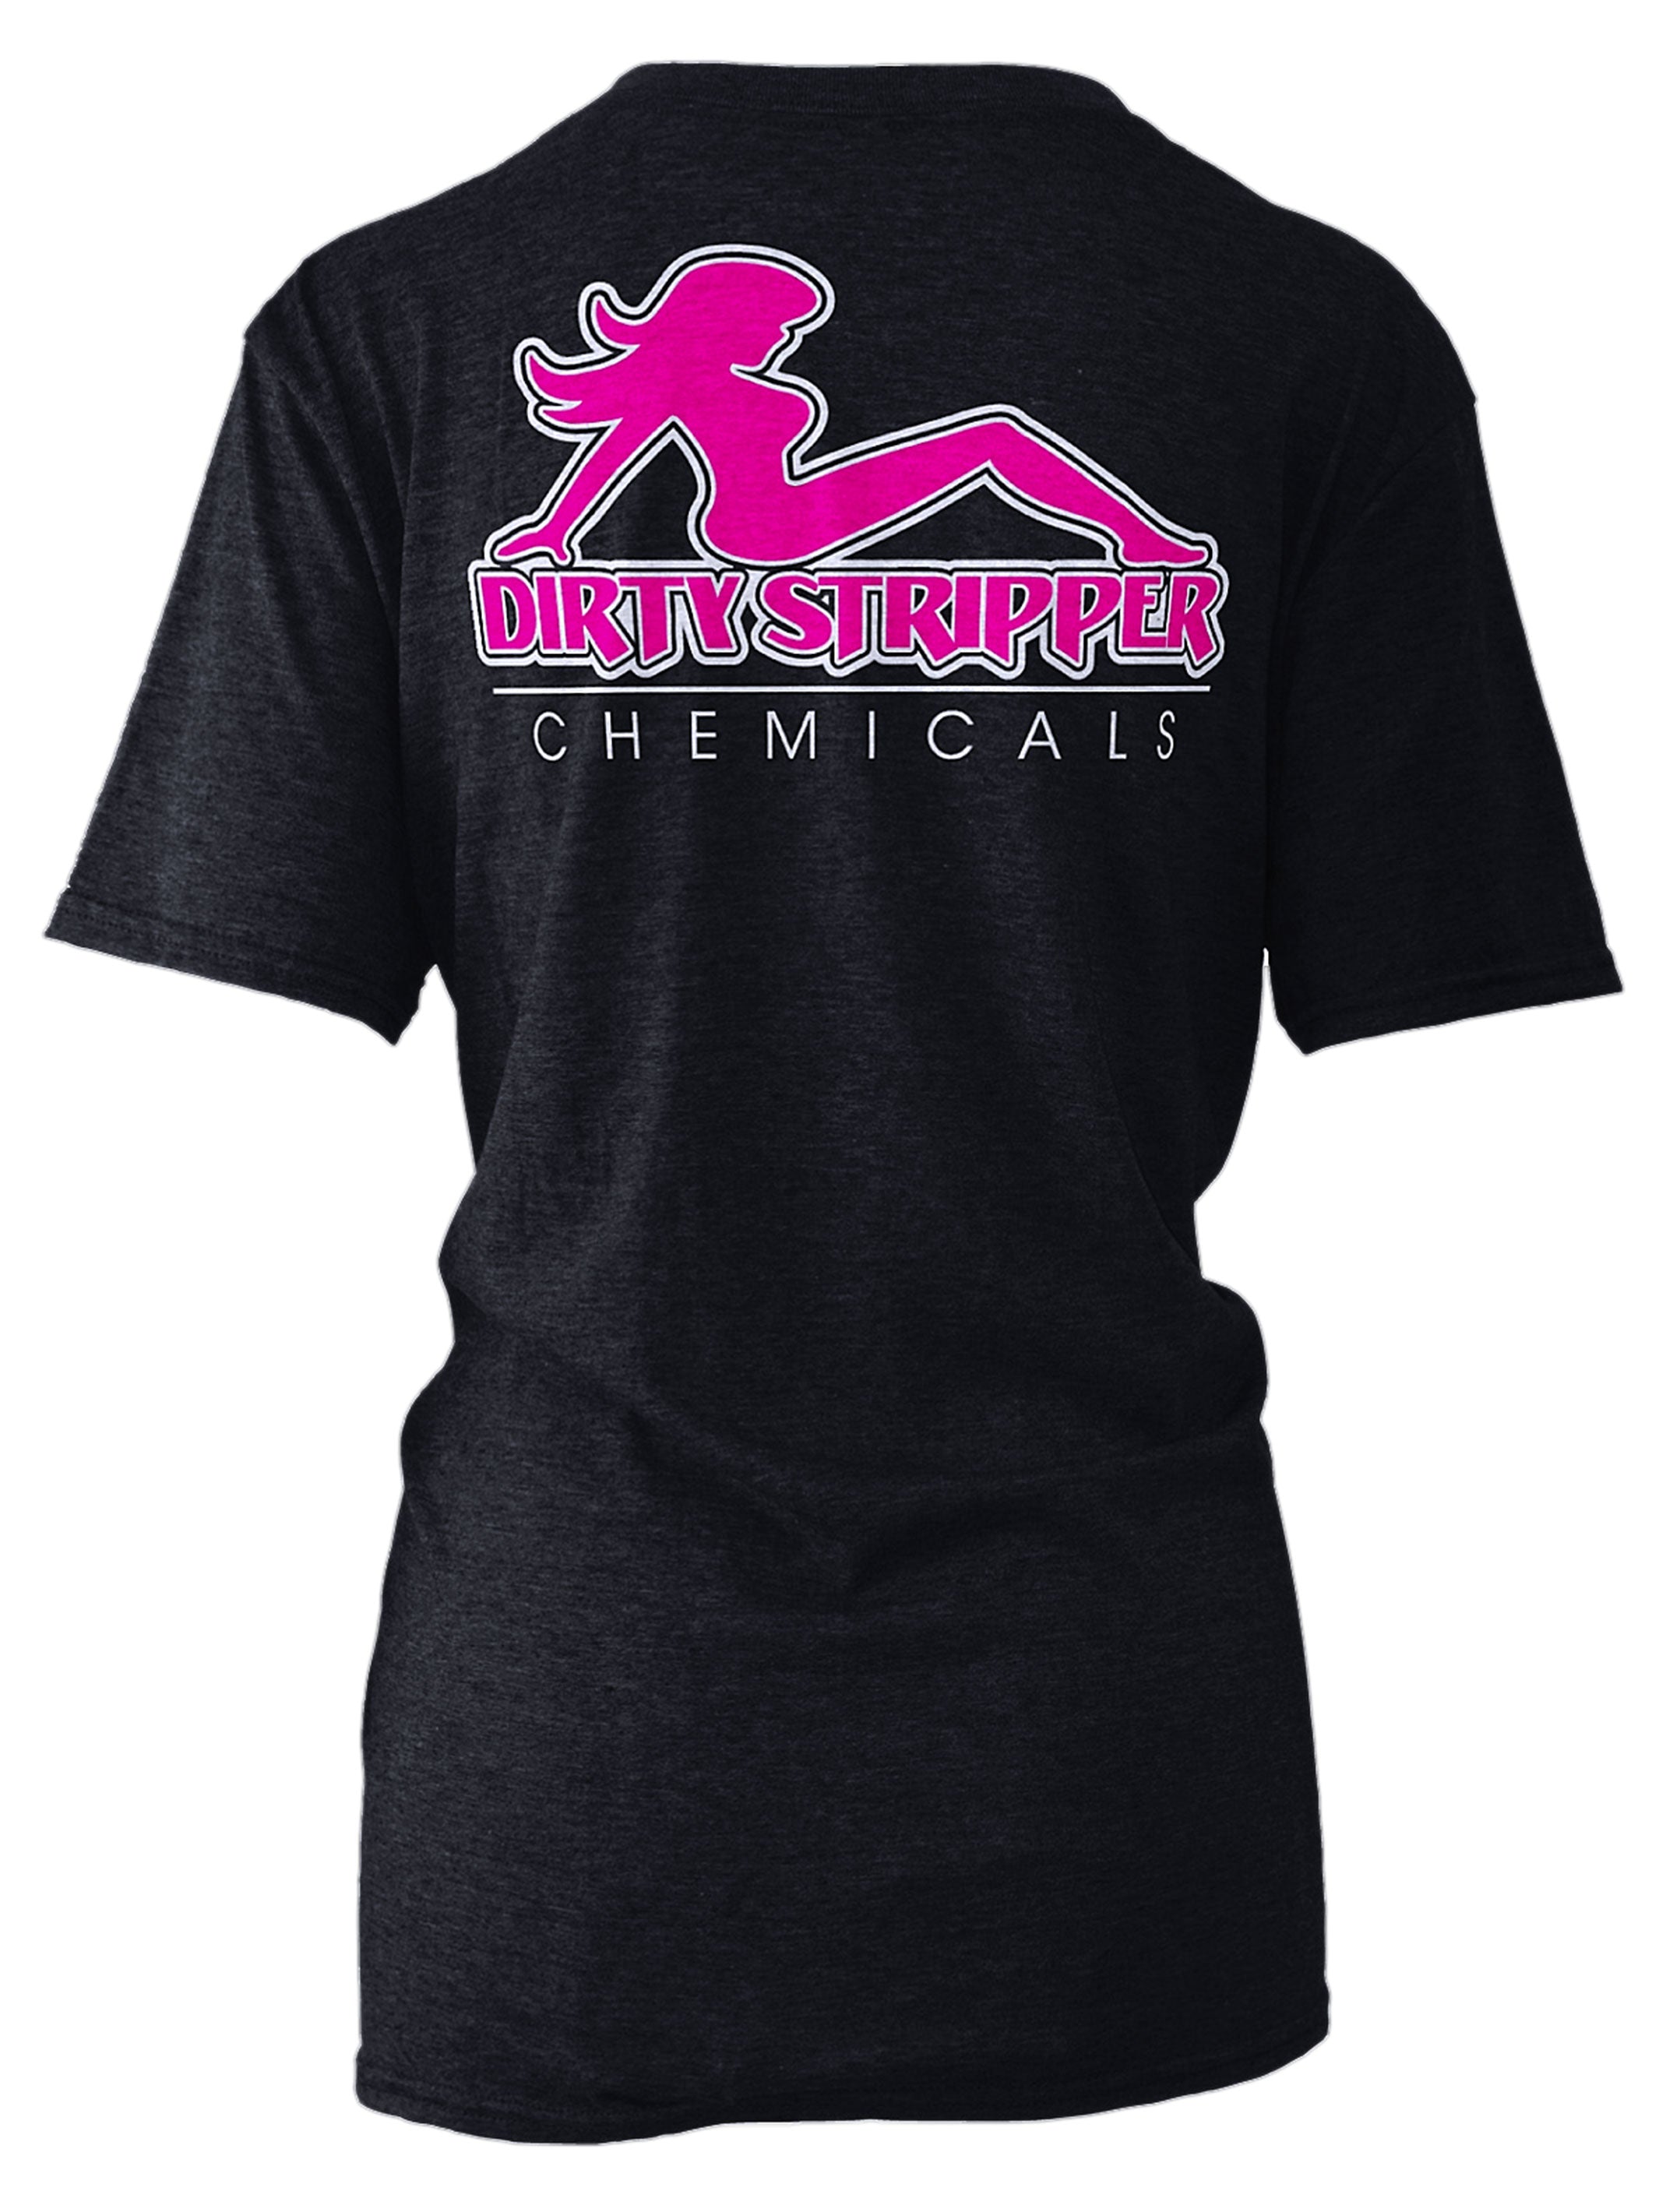 Short-Sleeve T-Shirt Black w/Pink Logo